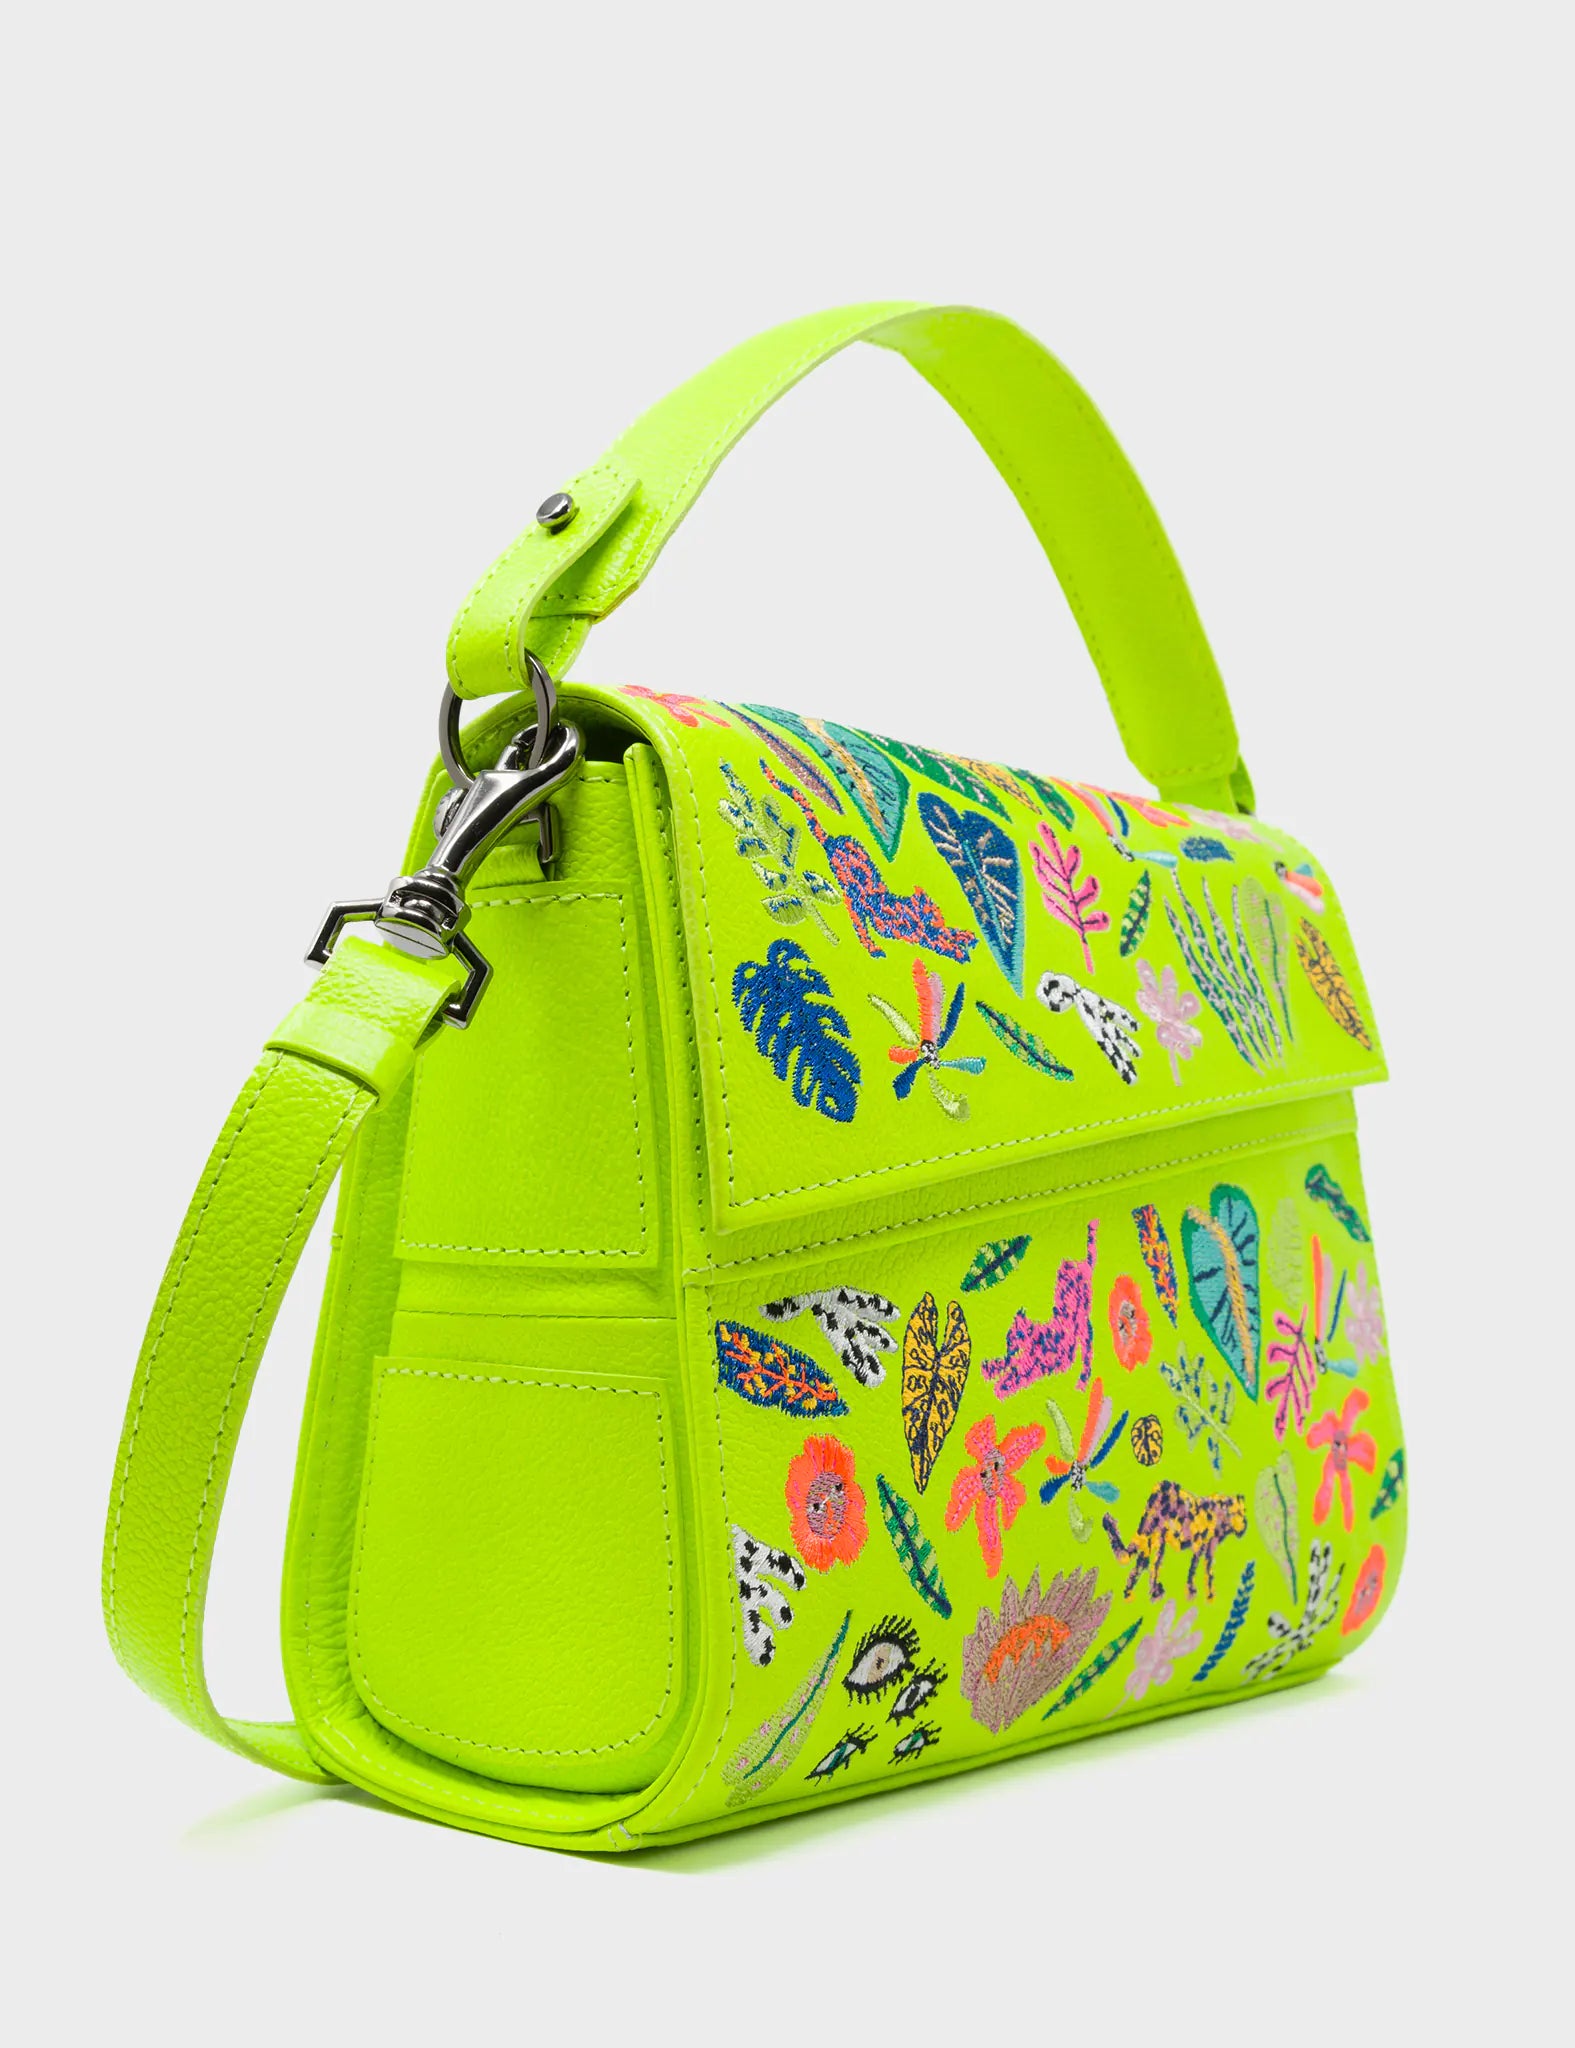 Anastasio Mini Crossbody Handbag Neon Yellow Leather - El Trópico Embroidery Design - Side detail